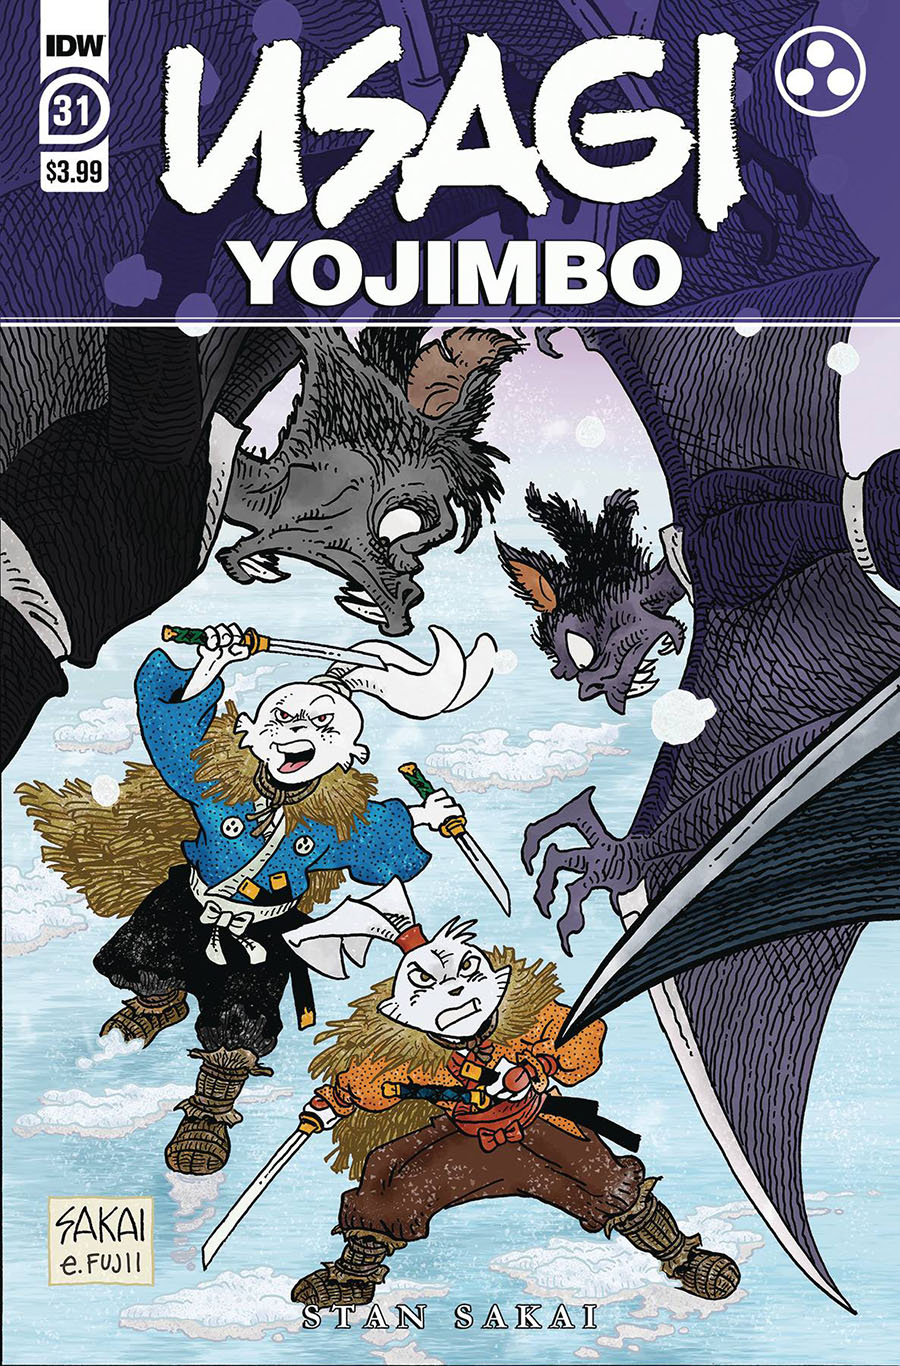 Usagi Yojimbo Vol 4 #31 Cover A Regular Stan Sakai Cover